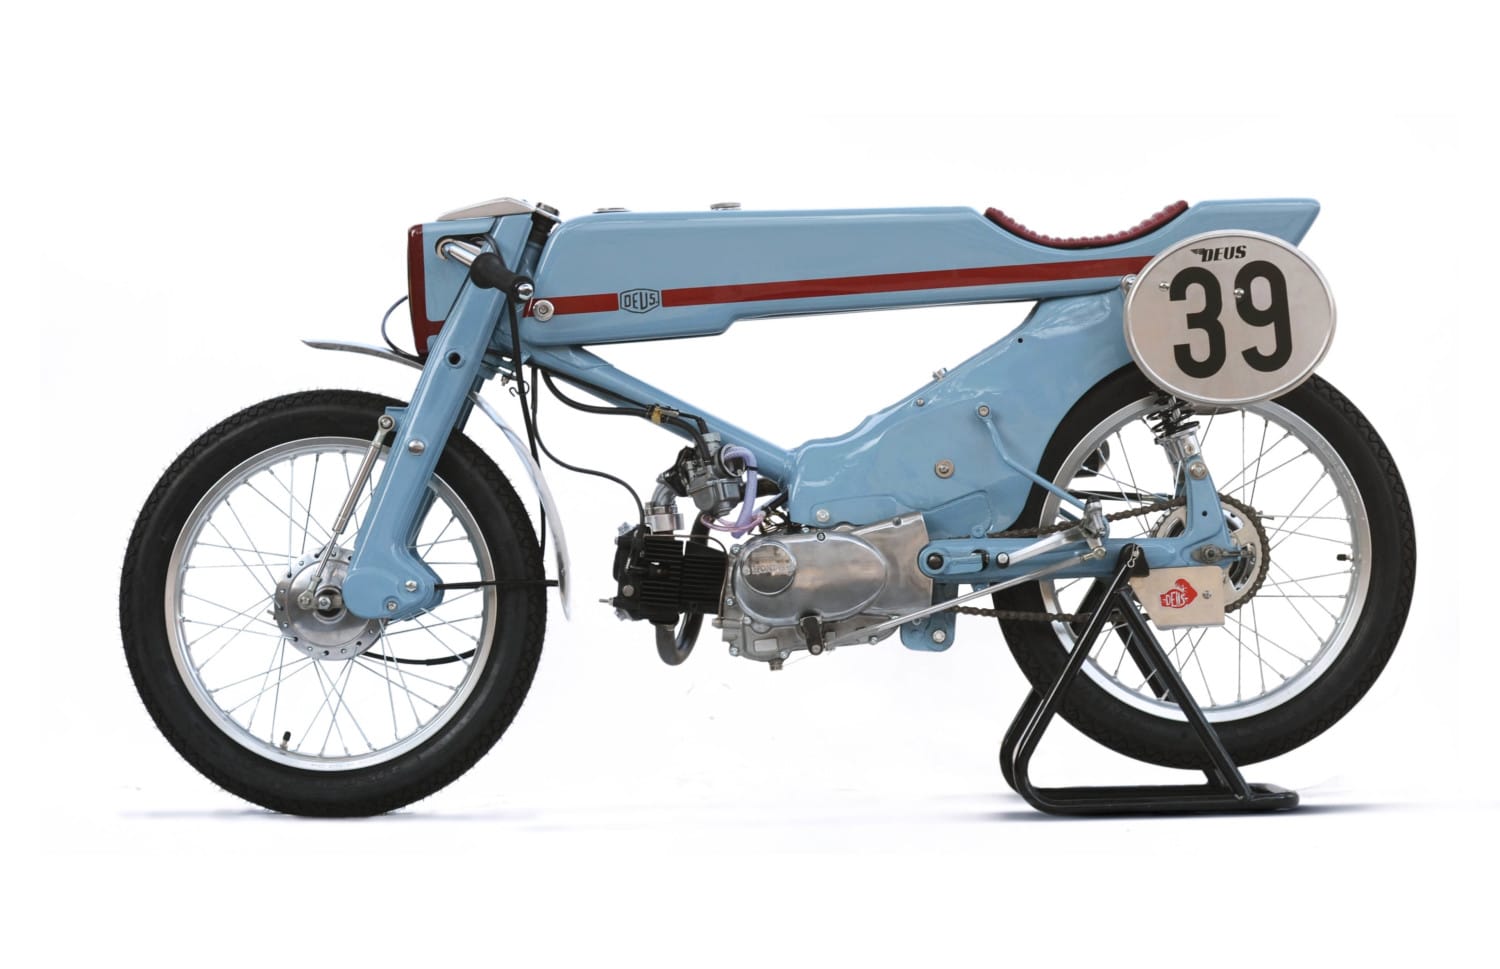 Honda Cub ka’ vi li’ – Vintage Race